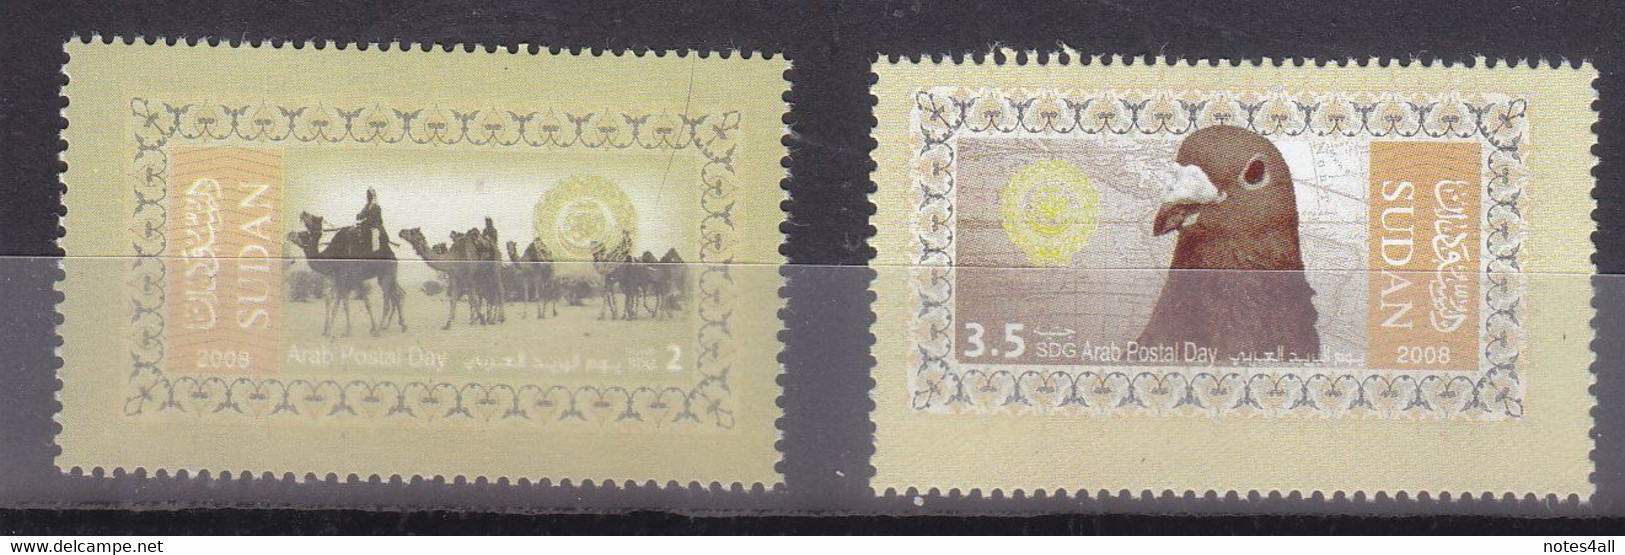 Stamps SUDAN 2008 SC-615 616 ARAB POST DAY MNH SET # 42 - Sudan (1954-...)